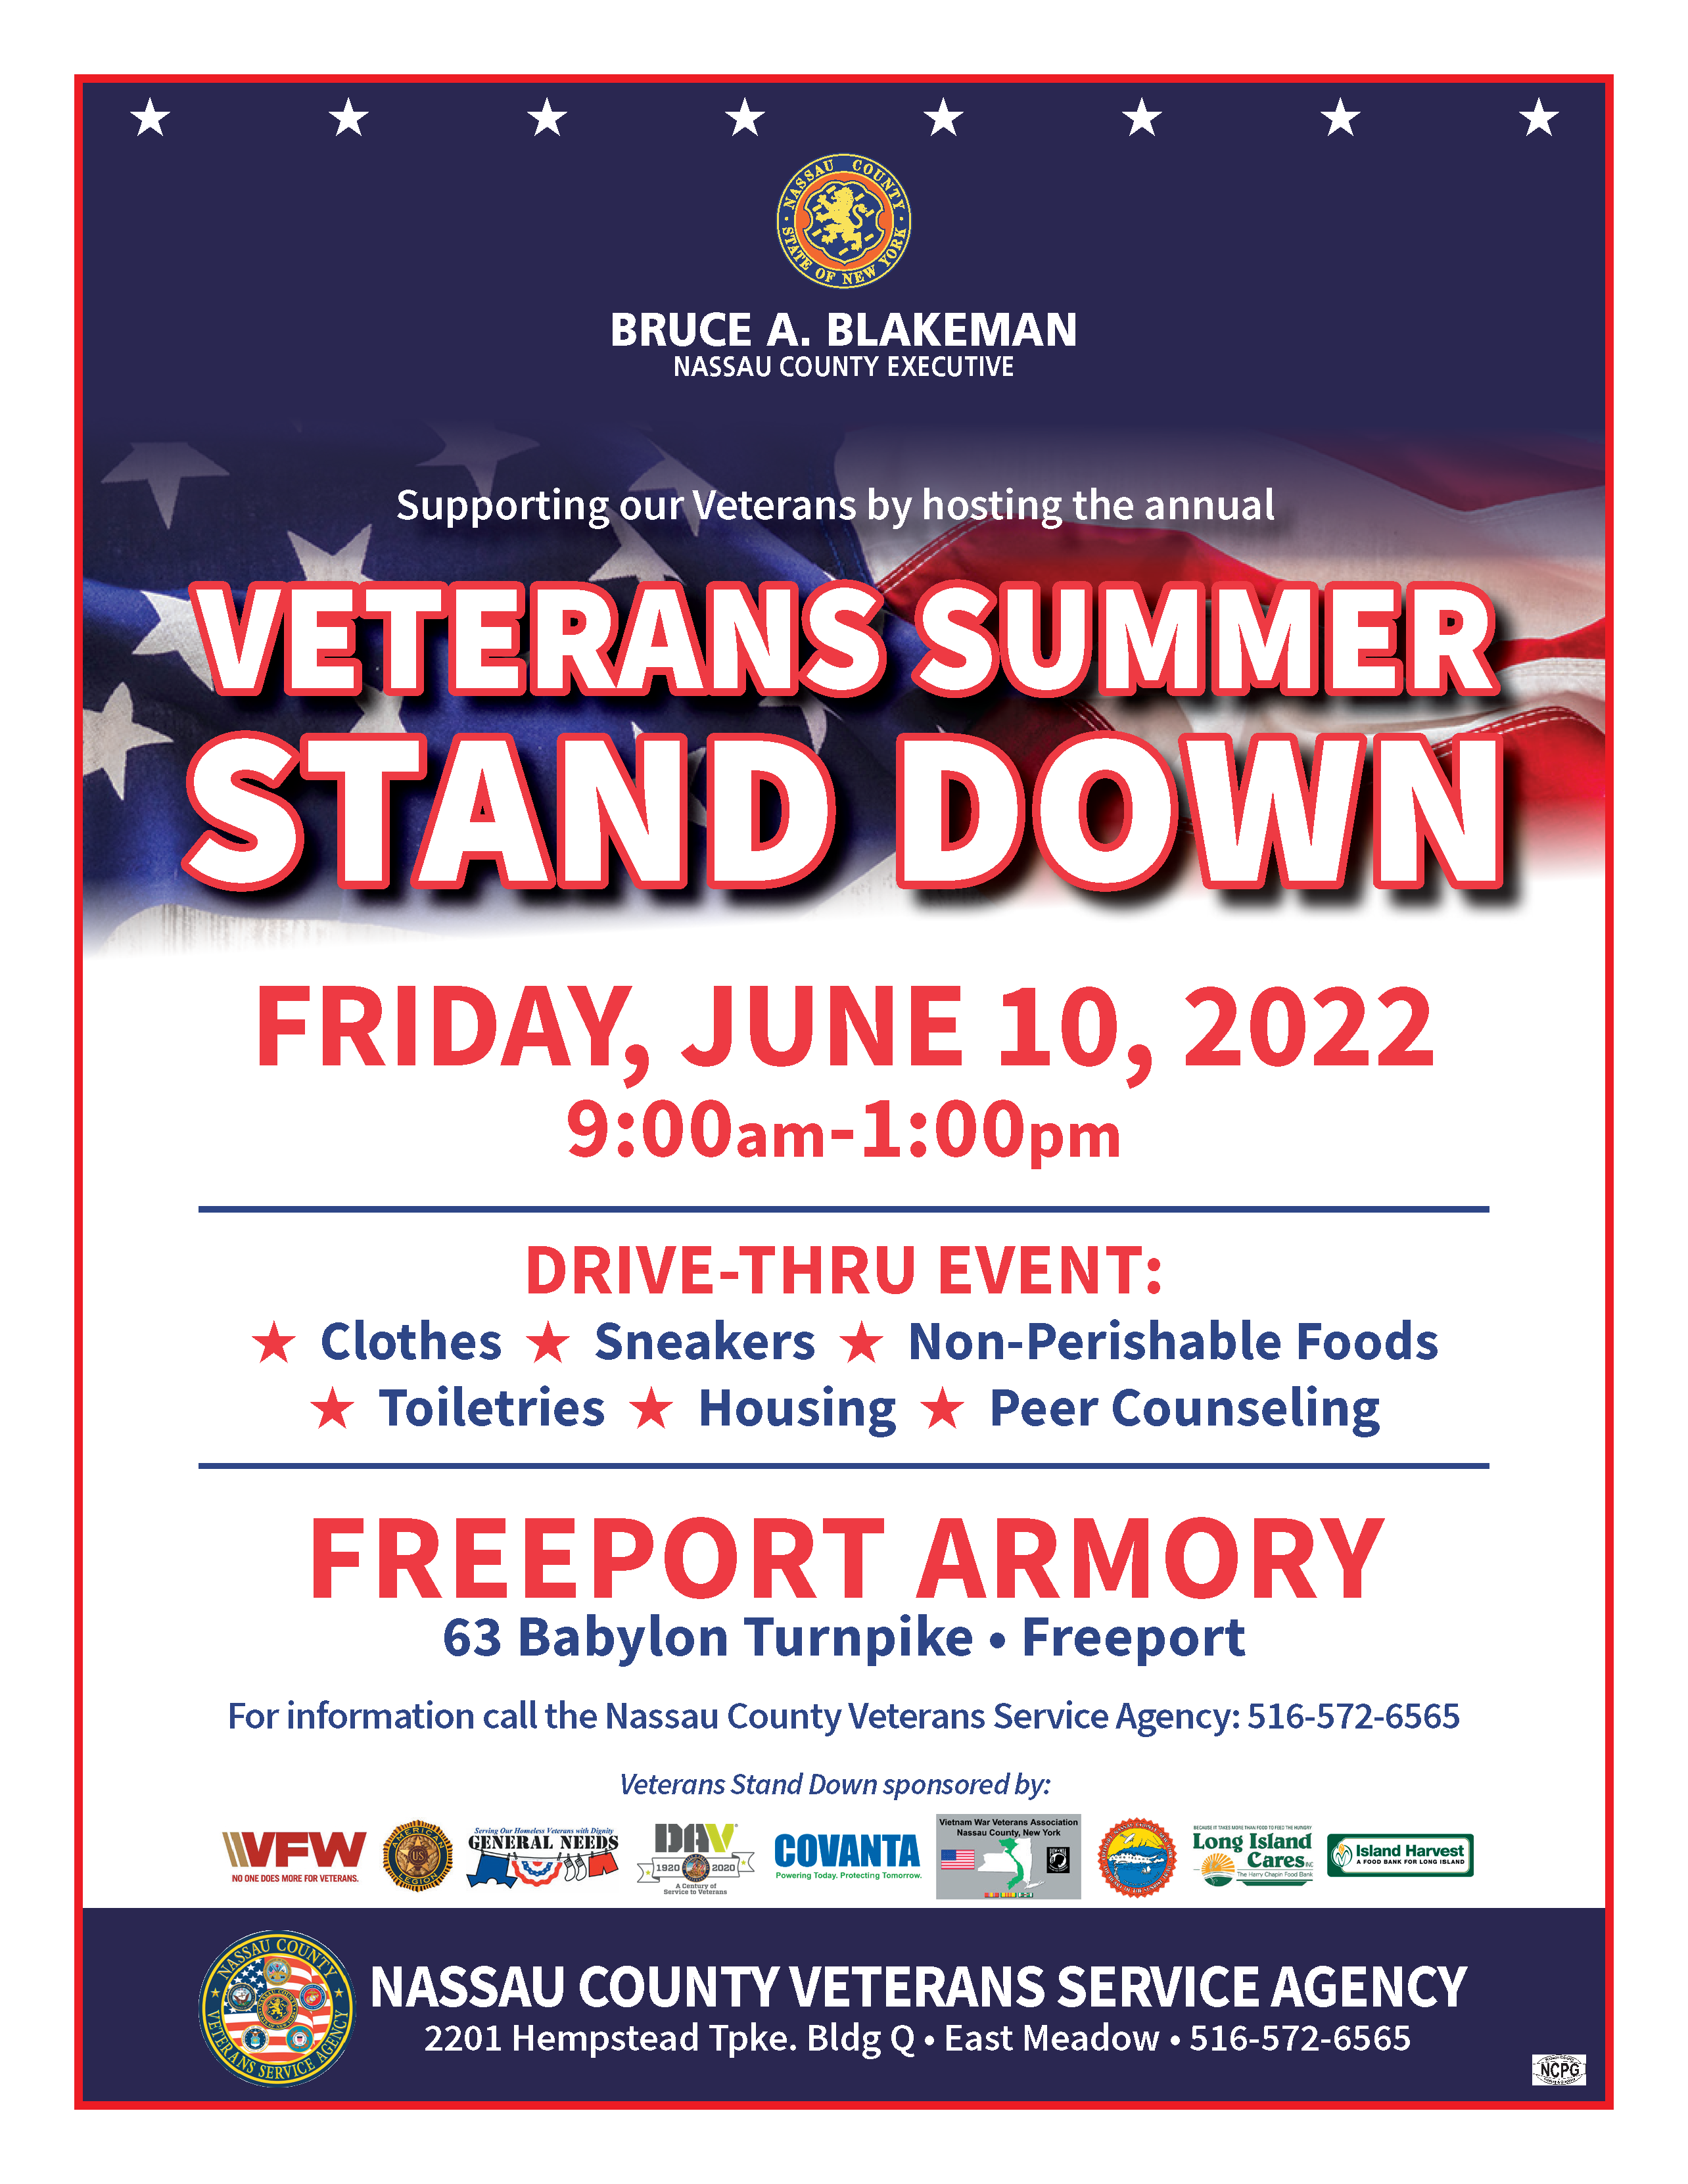 Veterans Summer Stand Down Flyer 2022 Opens in new window